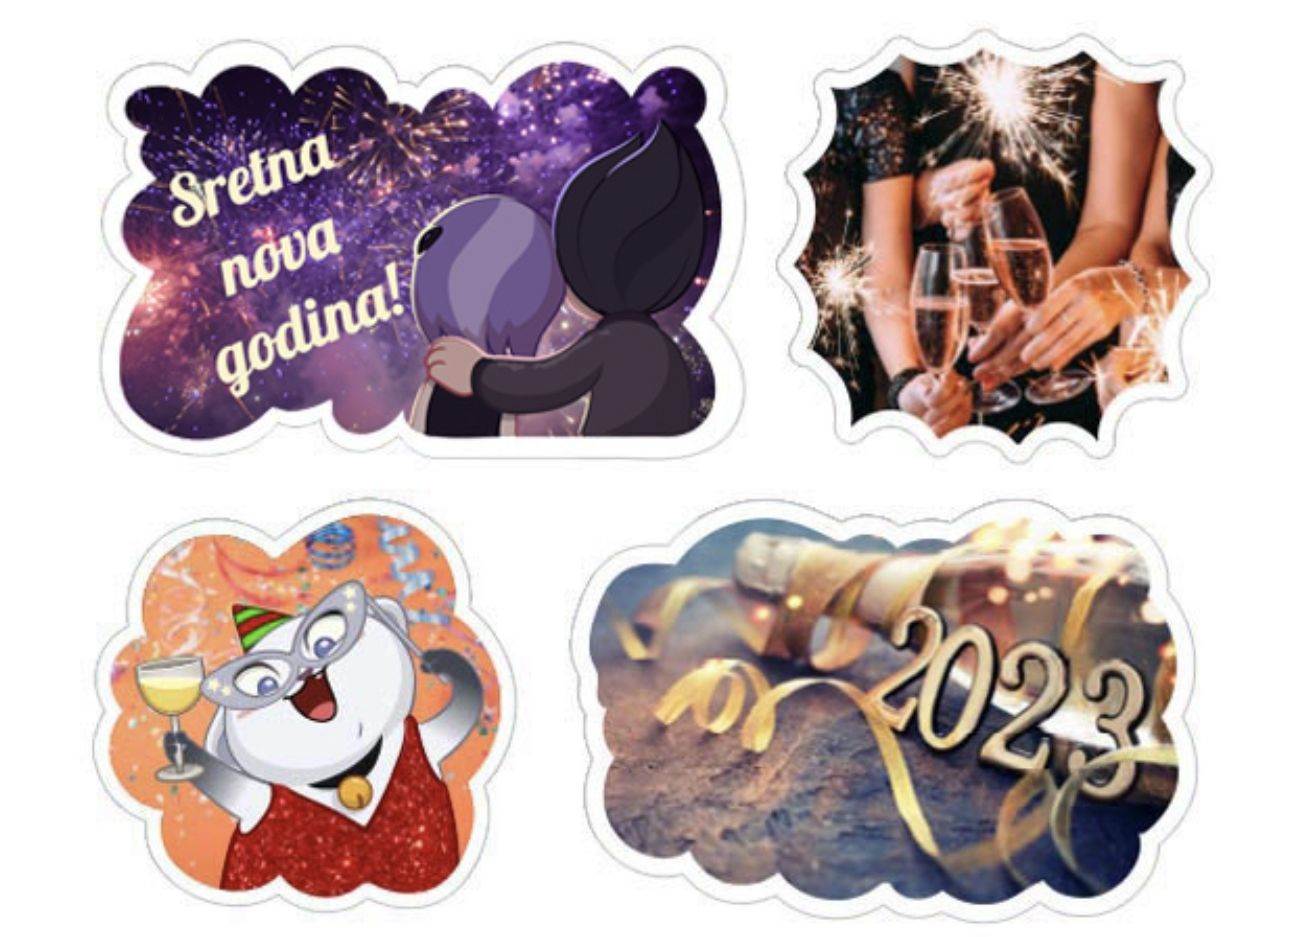  Novogodišnja proslava Viber sticker sretna nova 2023 godina (4).jpg 